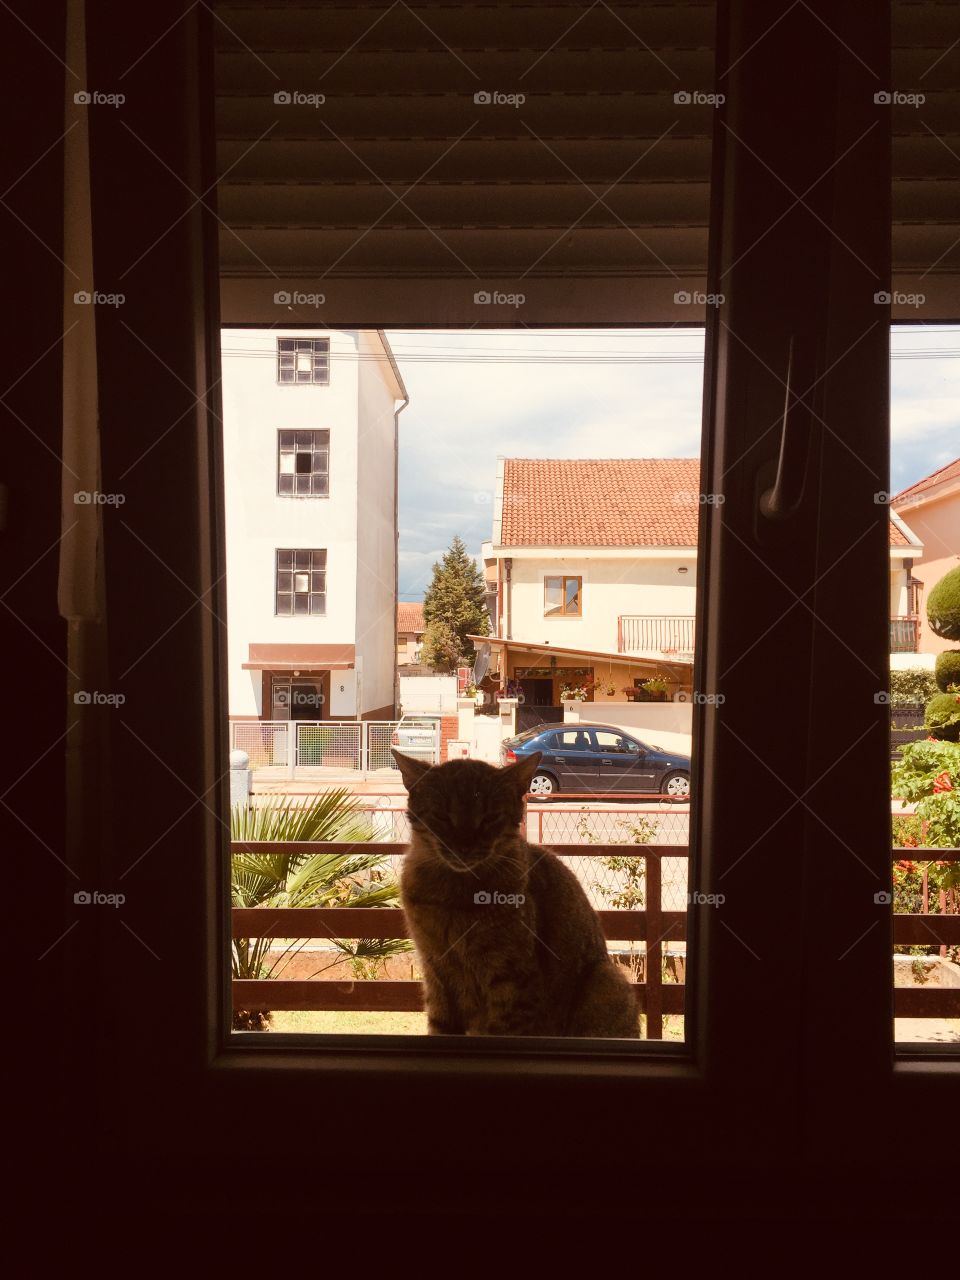 Cat on the window 